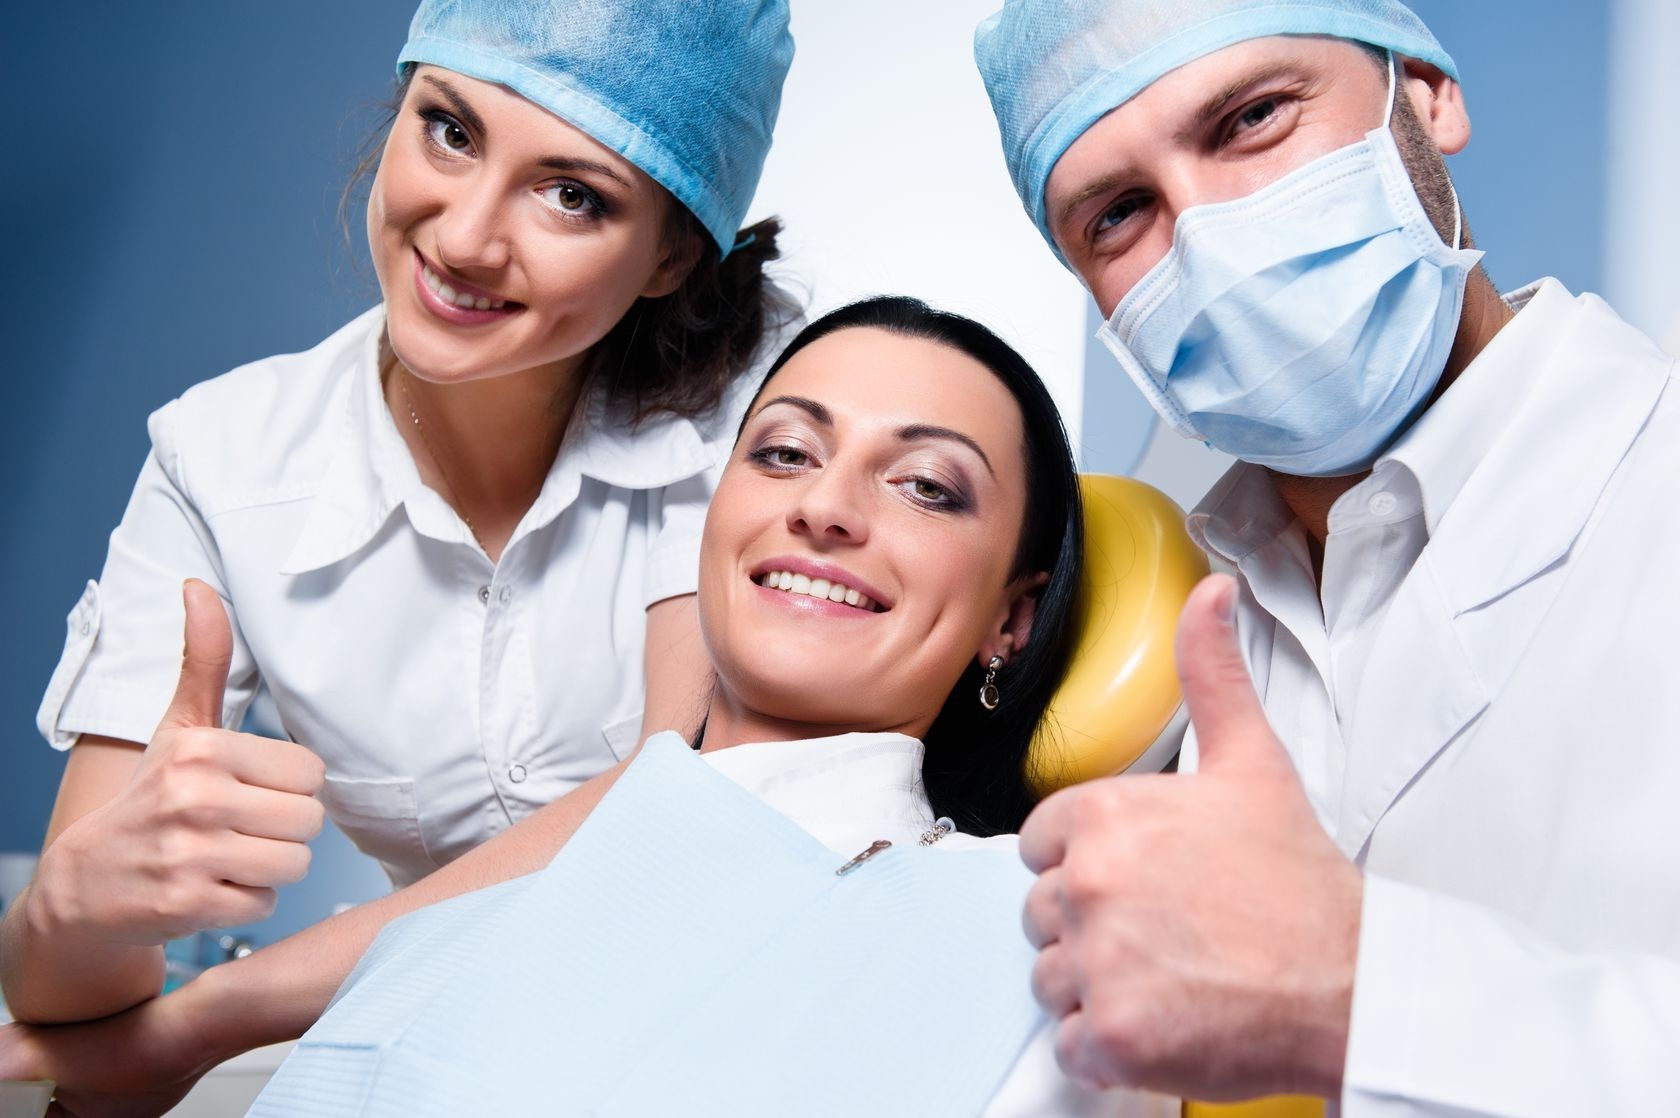 Affordable Dental Care For Everyone | DentalPlans Blog
